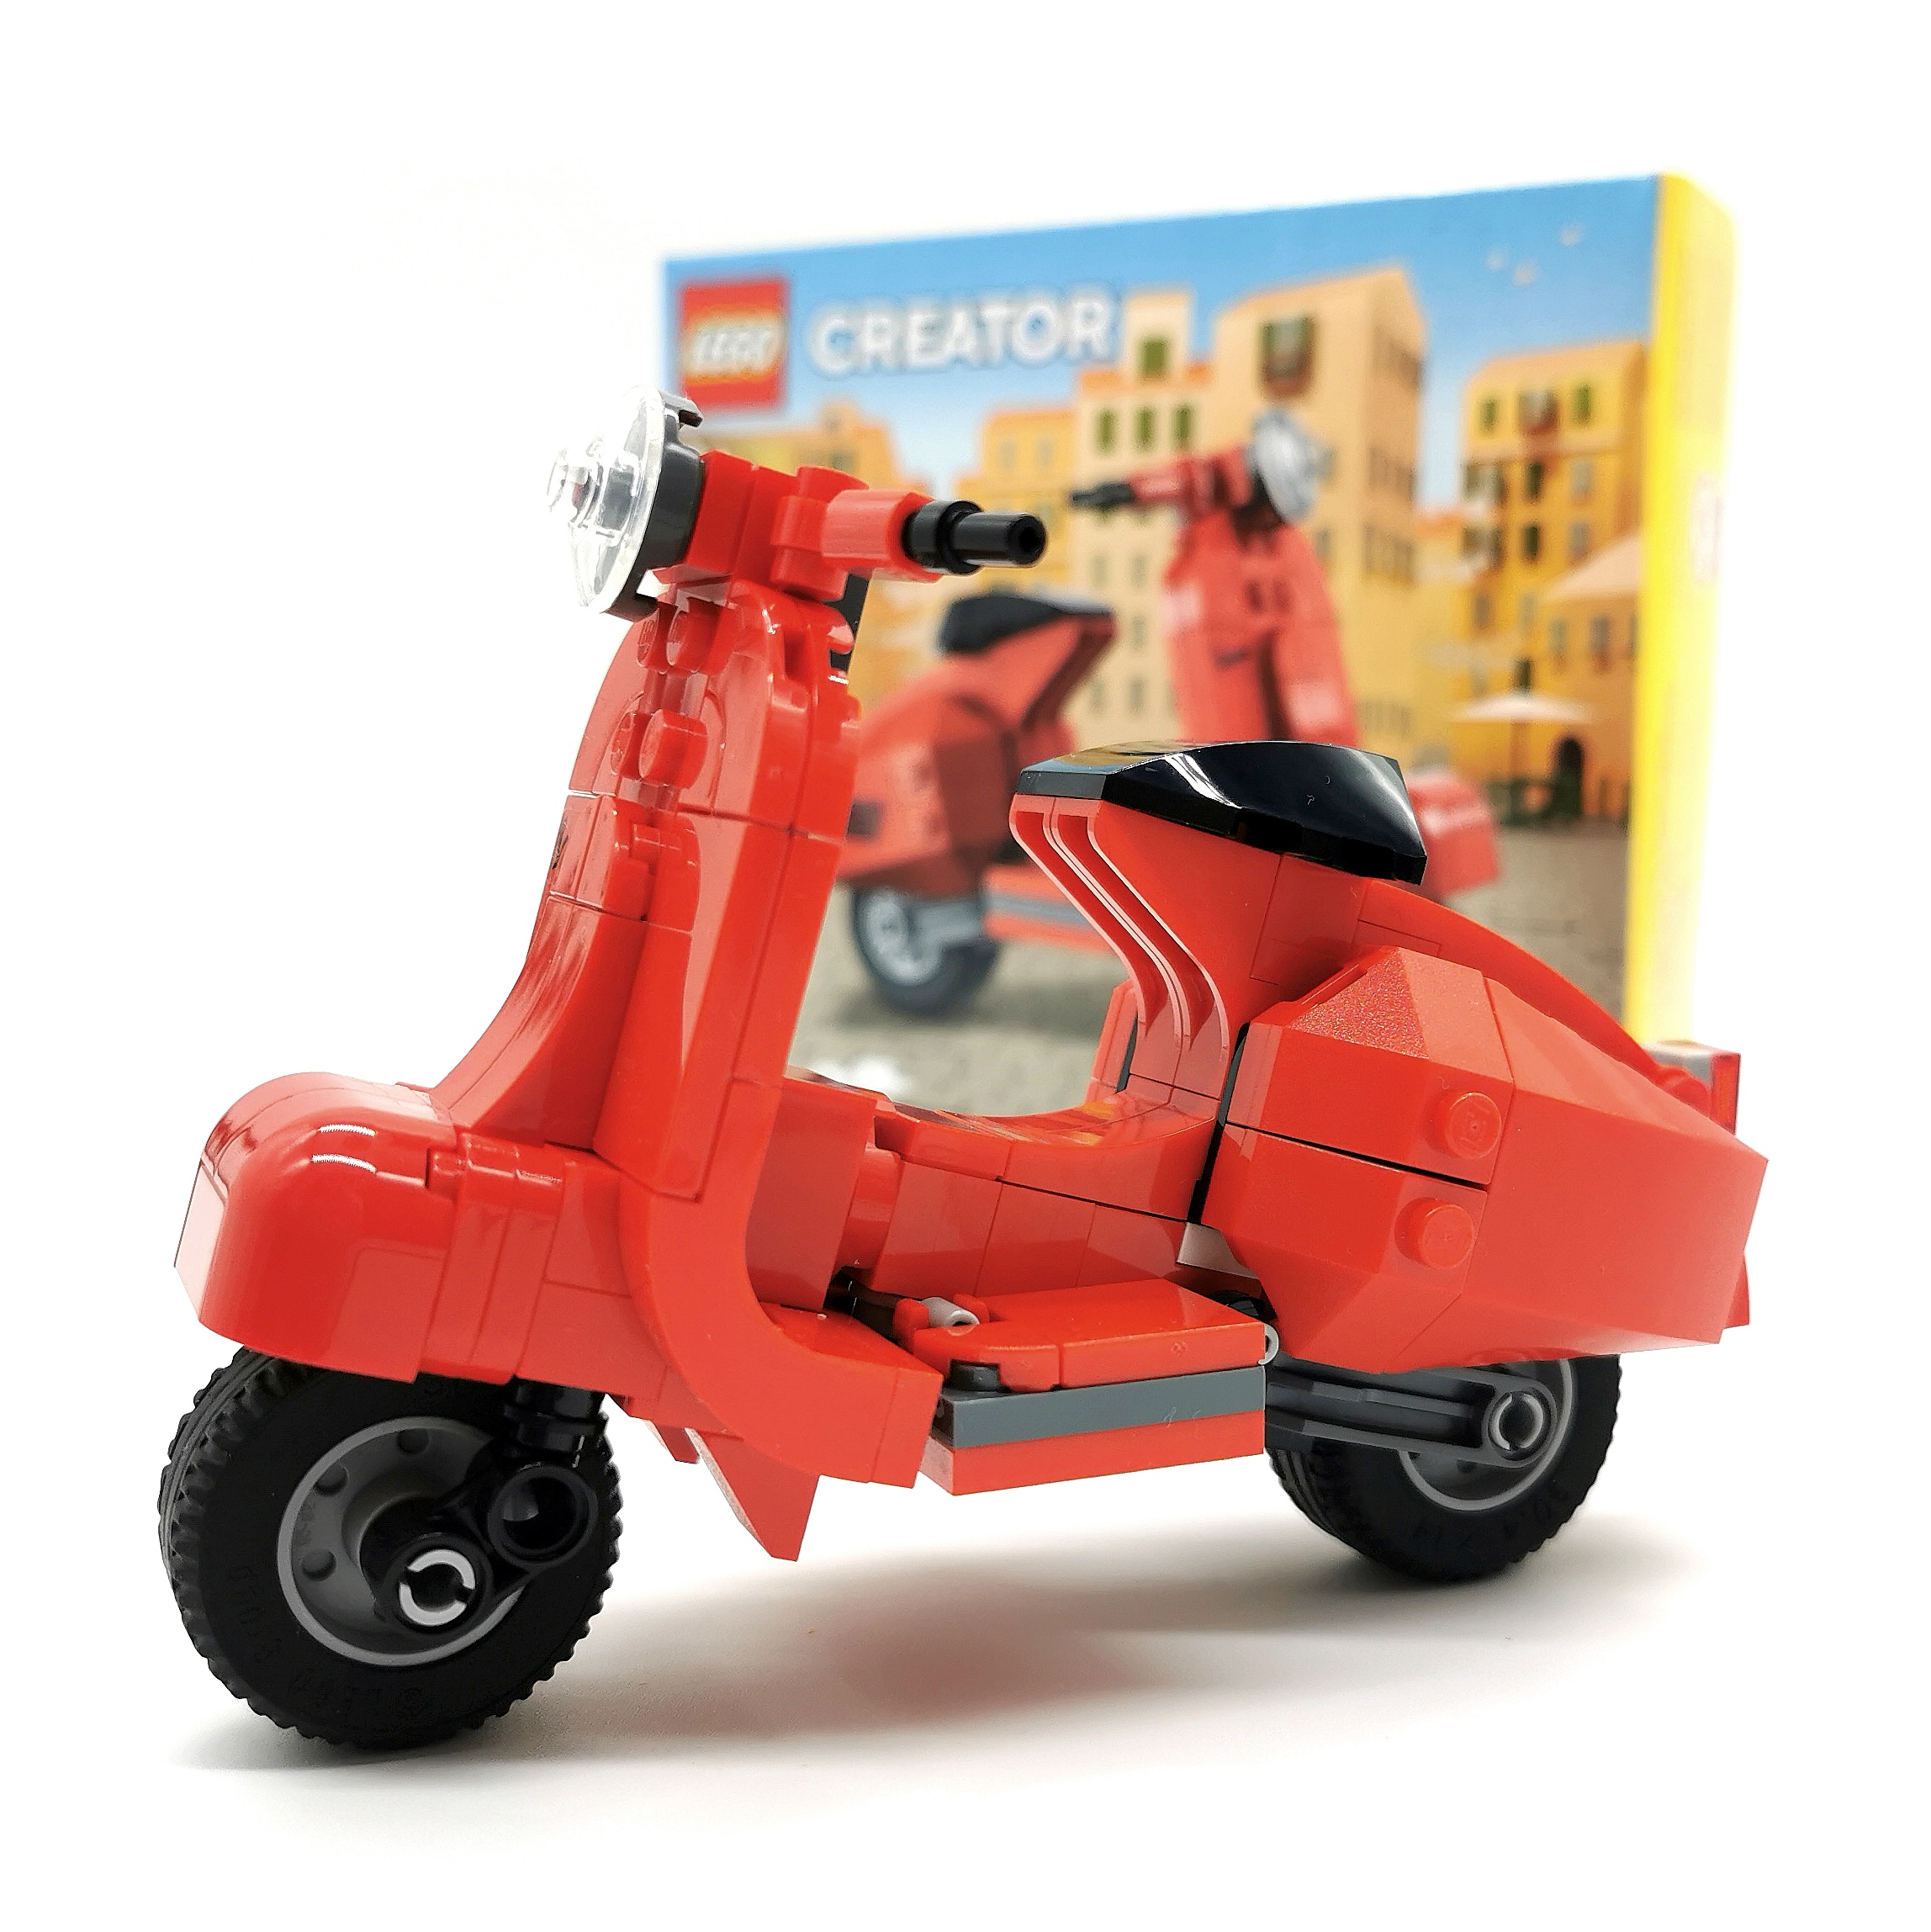 LEGO Vespa wheel hack on a cool custom Hot Rod + mini Vespa 